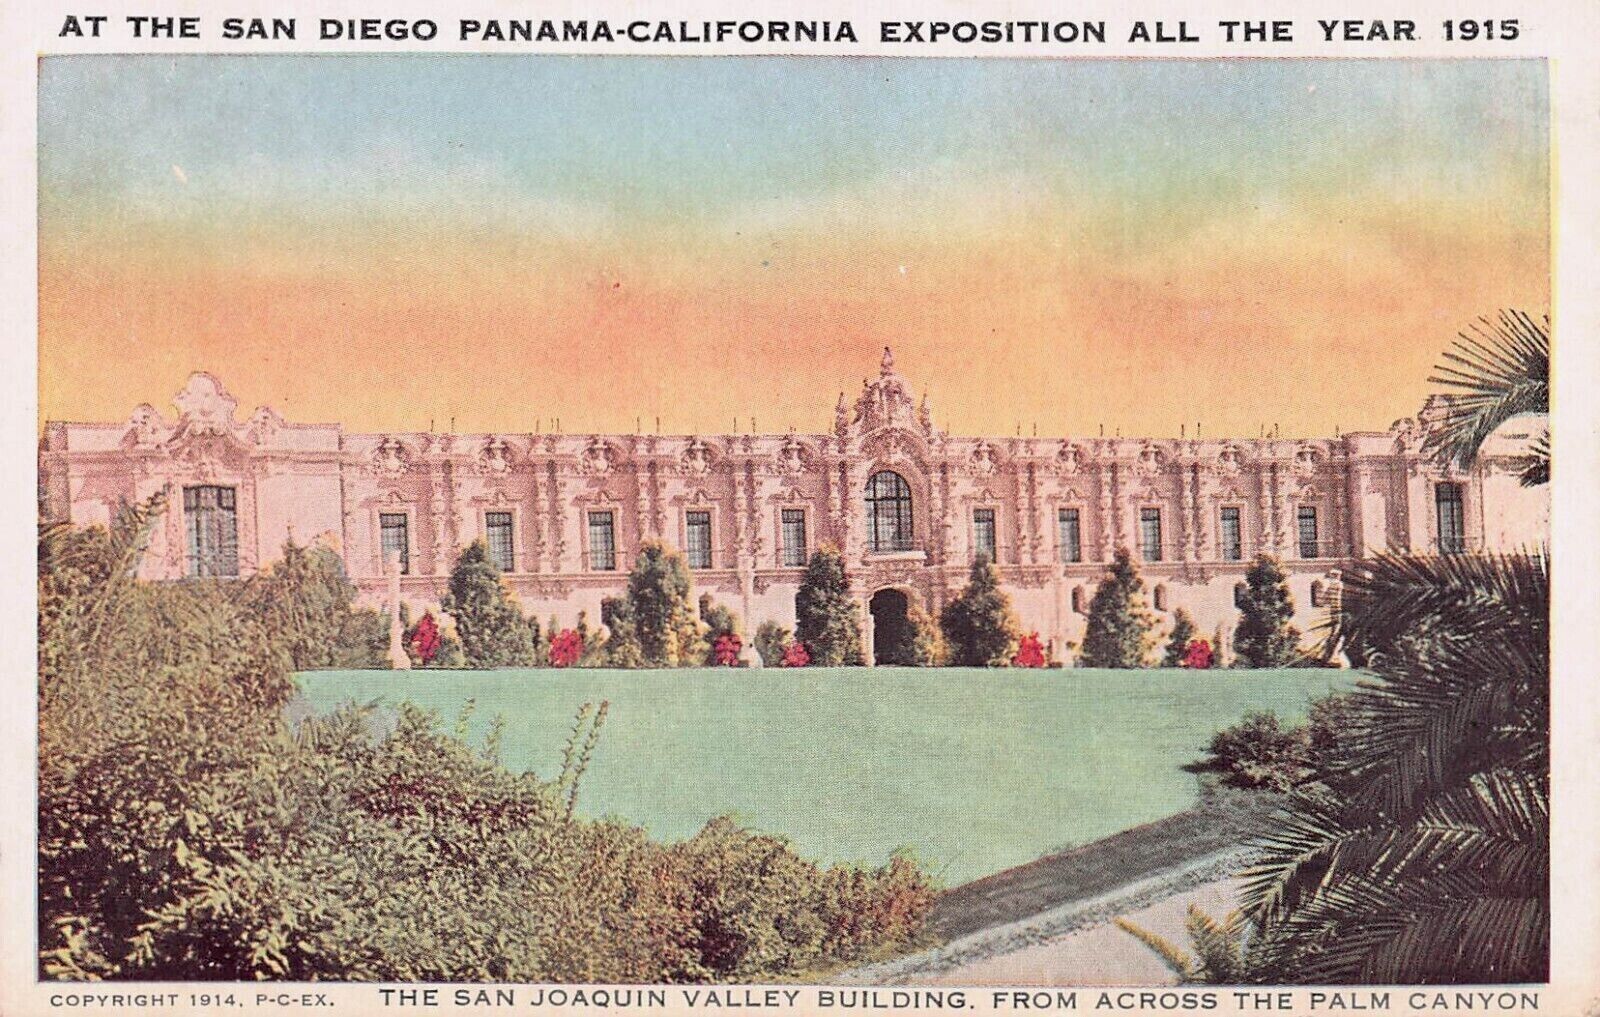 San Joaquin Valley Bldg., at the Panama-California Exposition, 1915 Postcard